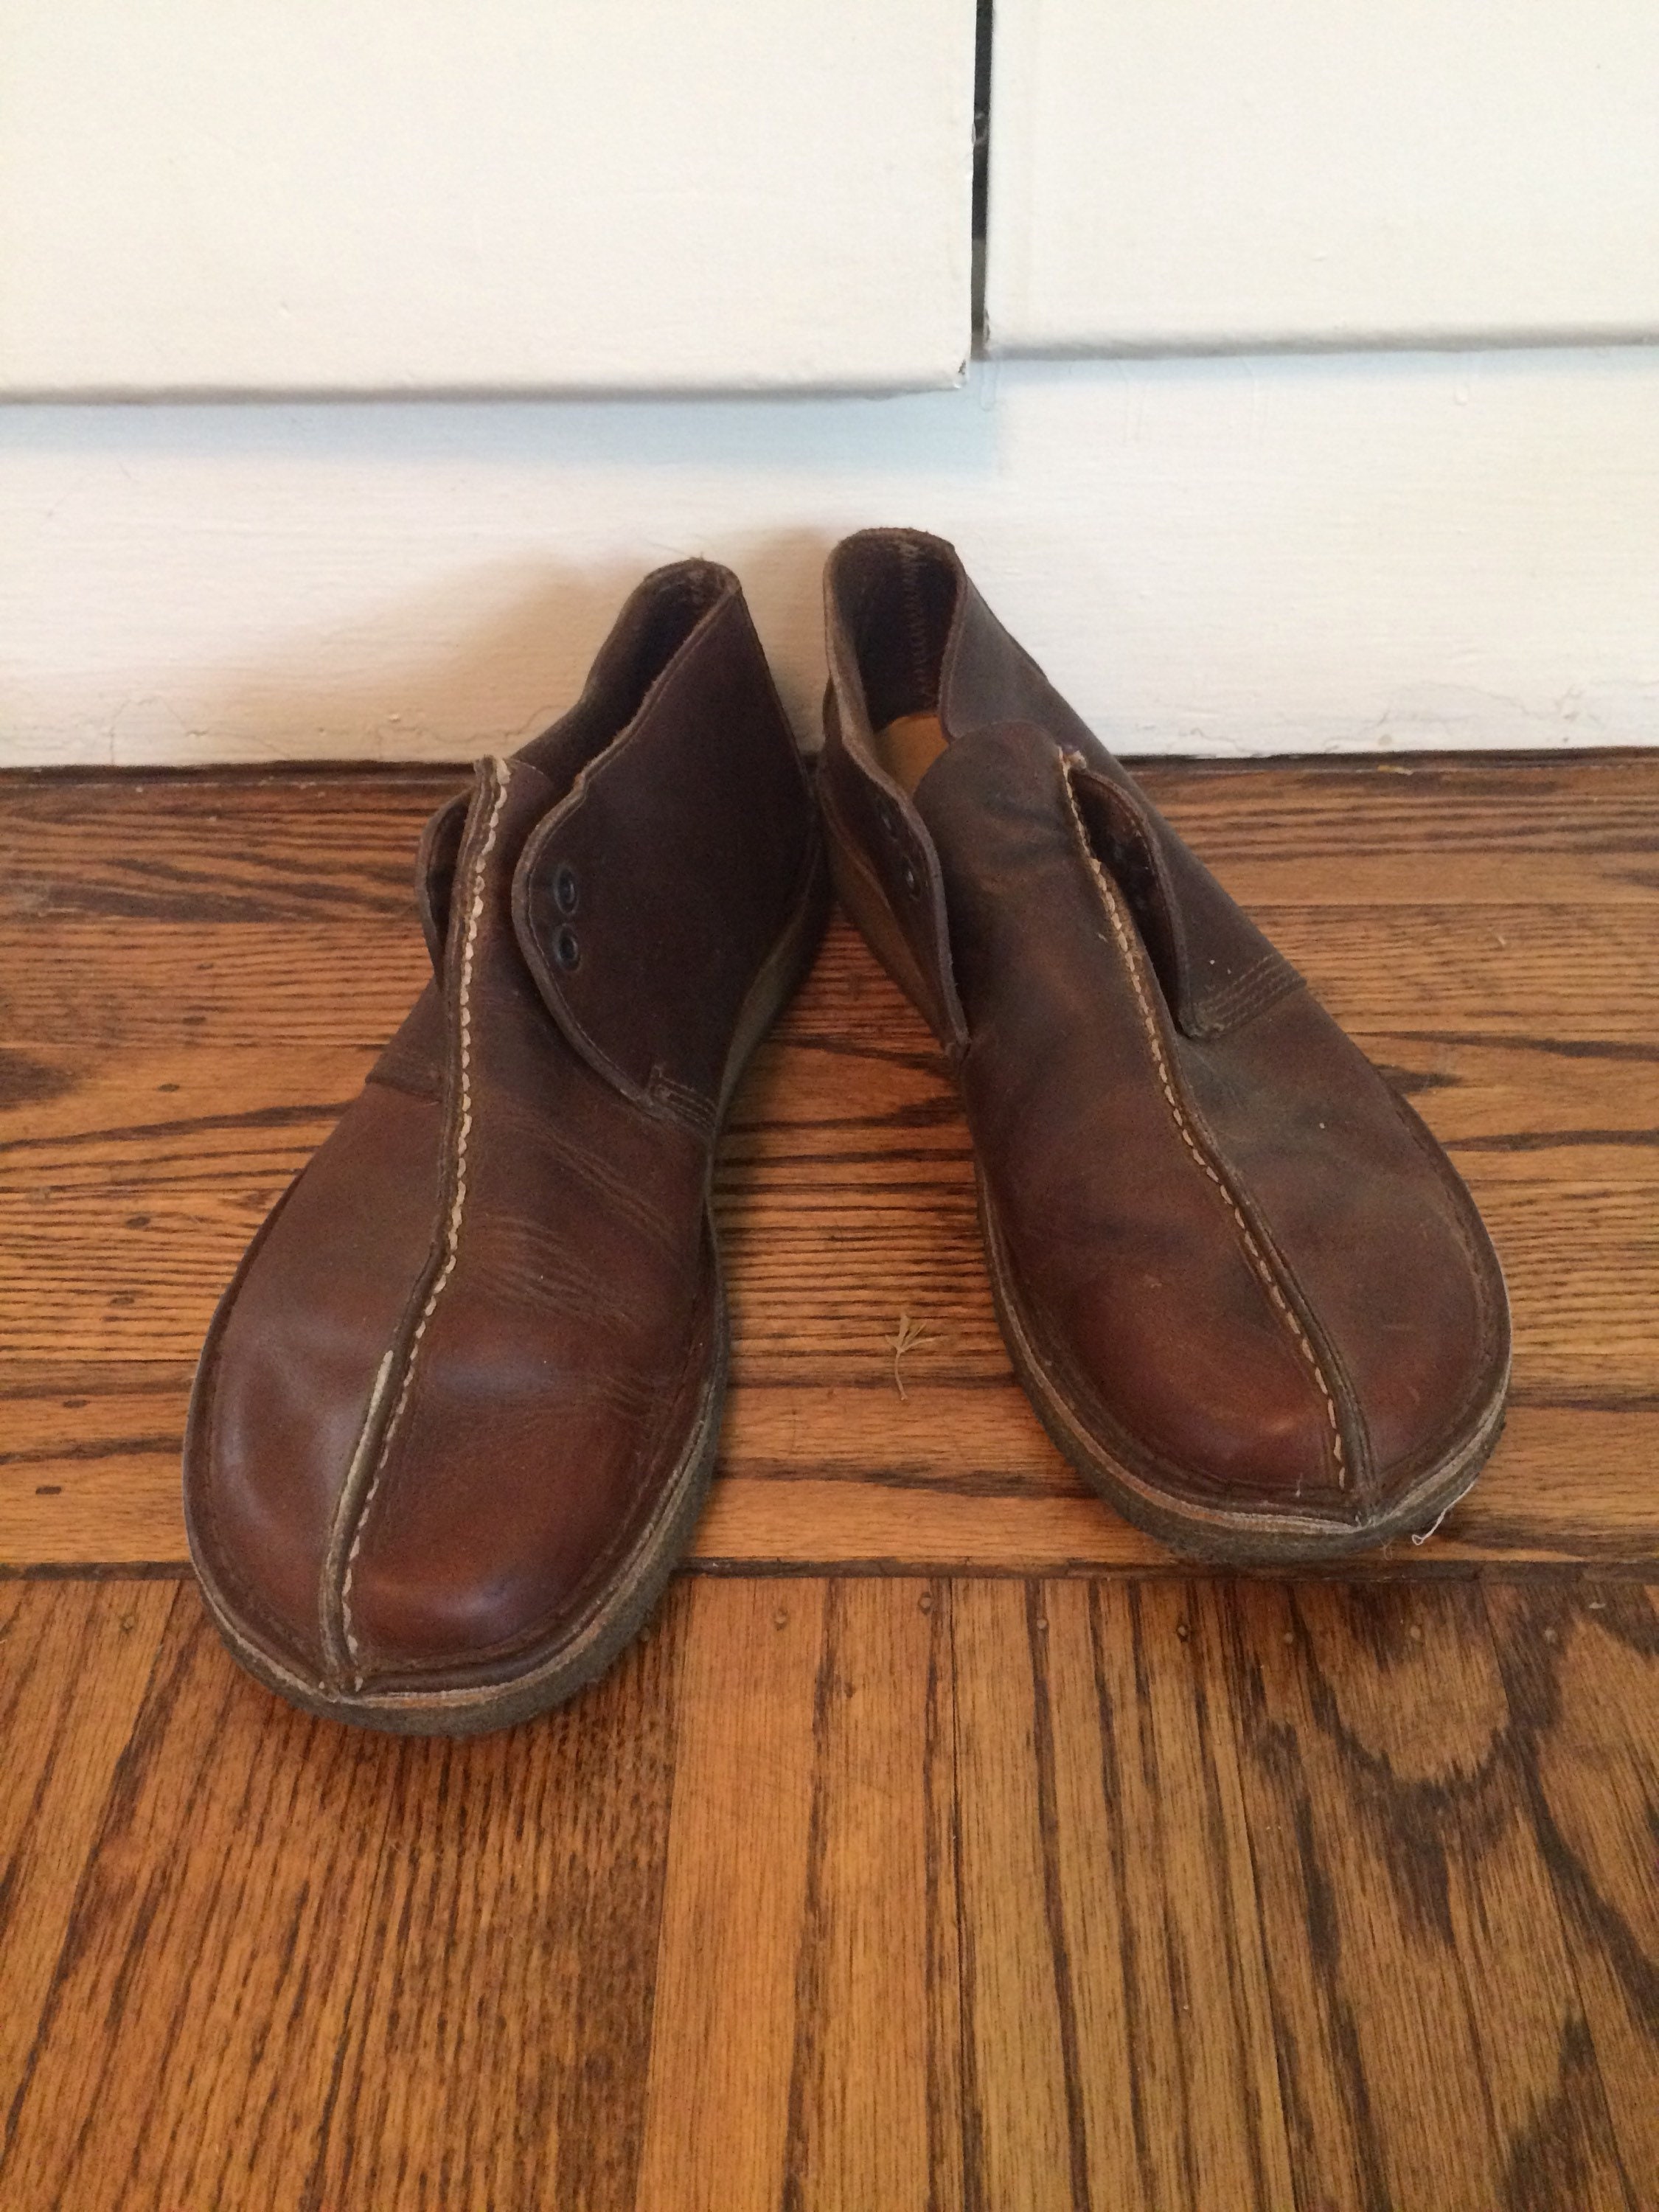 Vintage men's Clarks gum soles 1970's/80's brown | Etsy